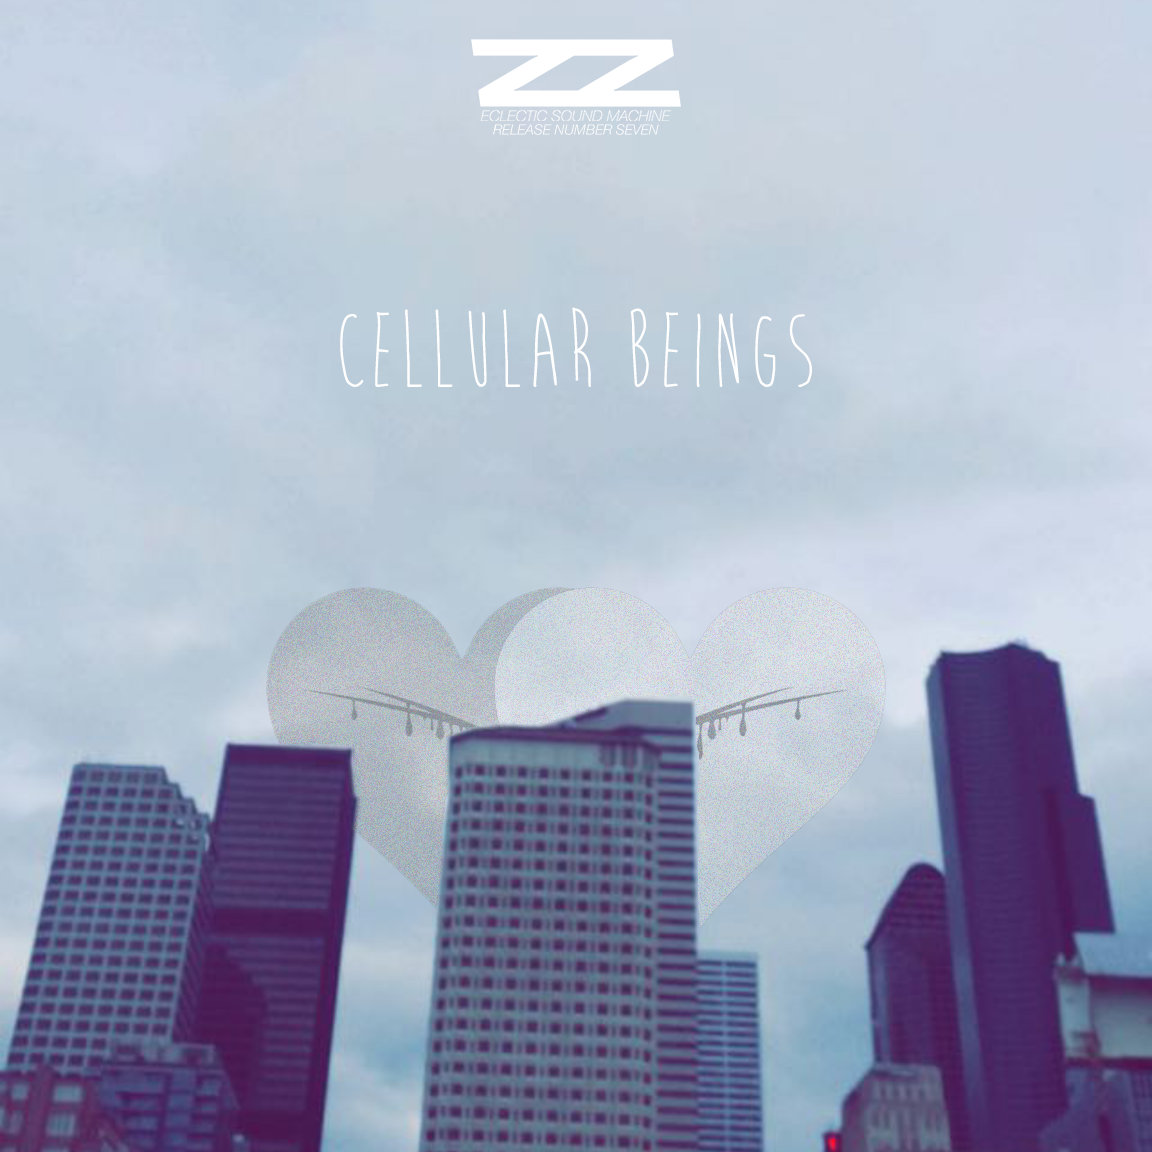 album cover for cellular beigns